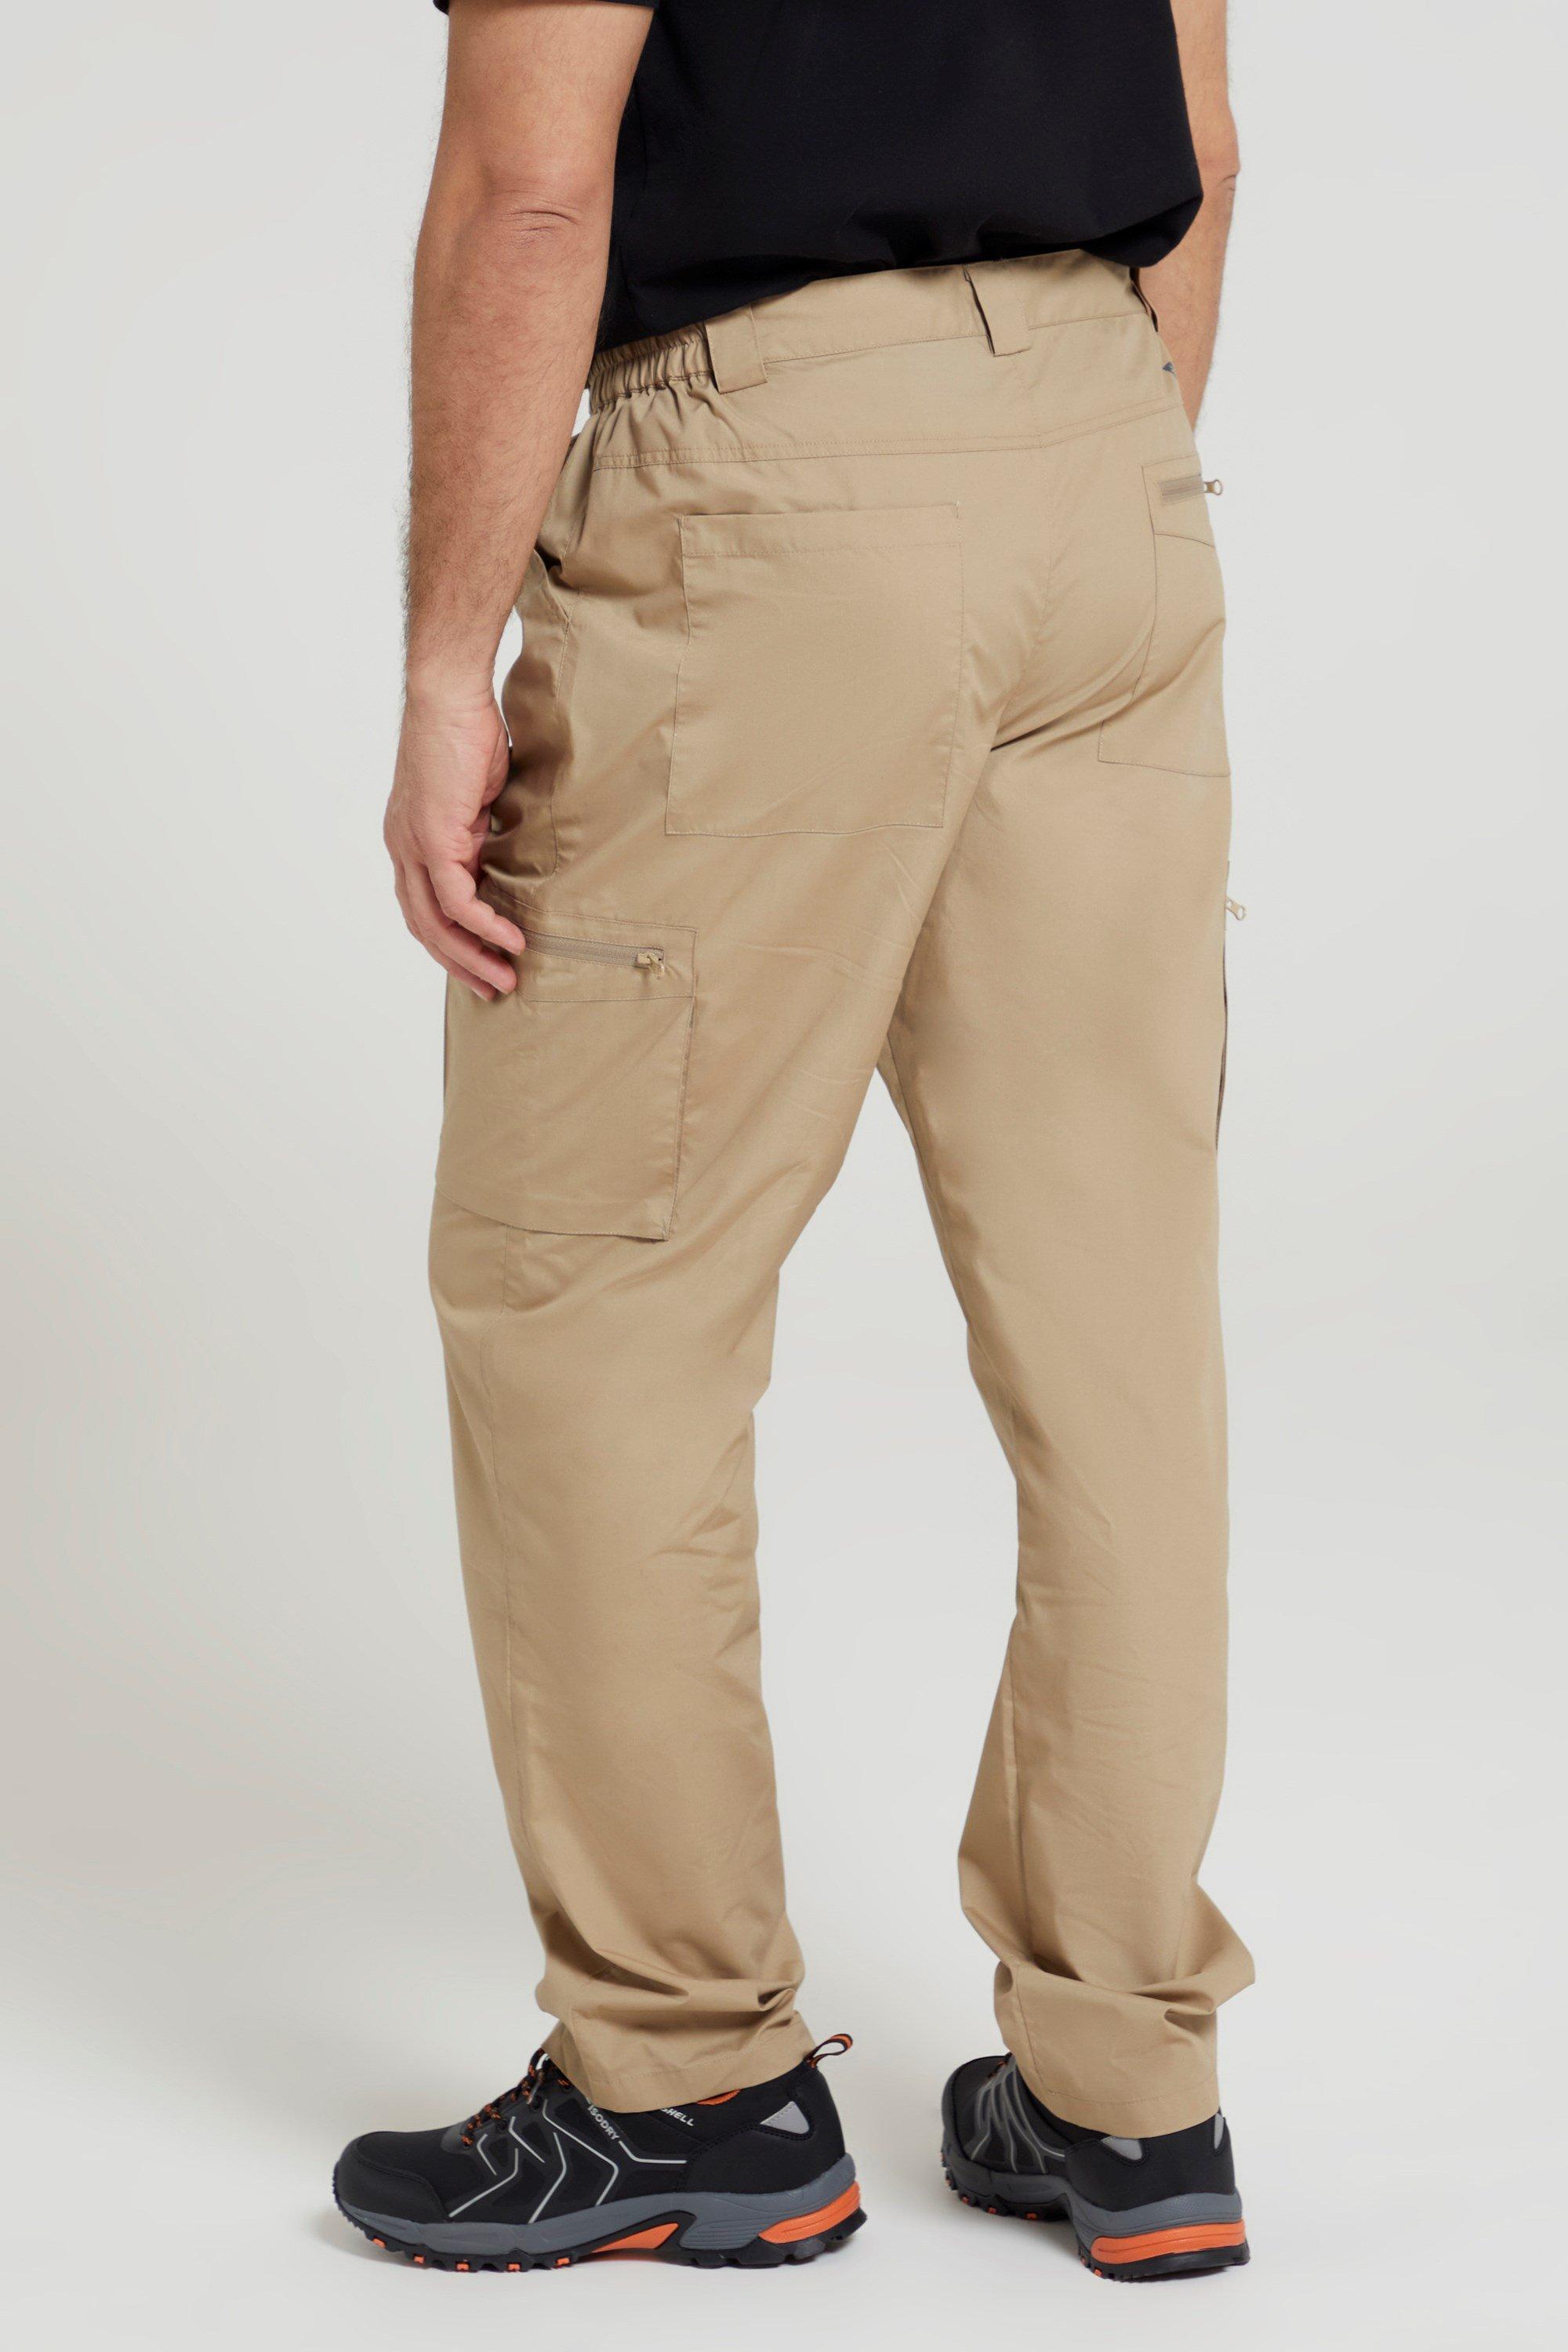 OZSALE | Mountain Warehouse Mountain Warehouse Womens Stretch Short Hiking  Trousers (Charcoal)